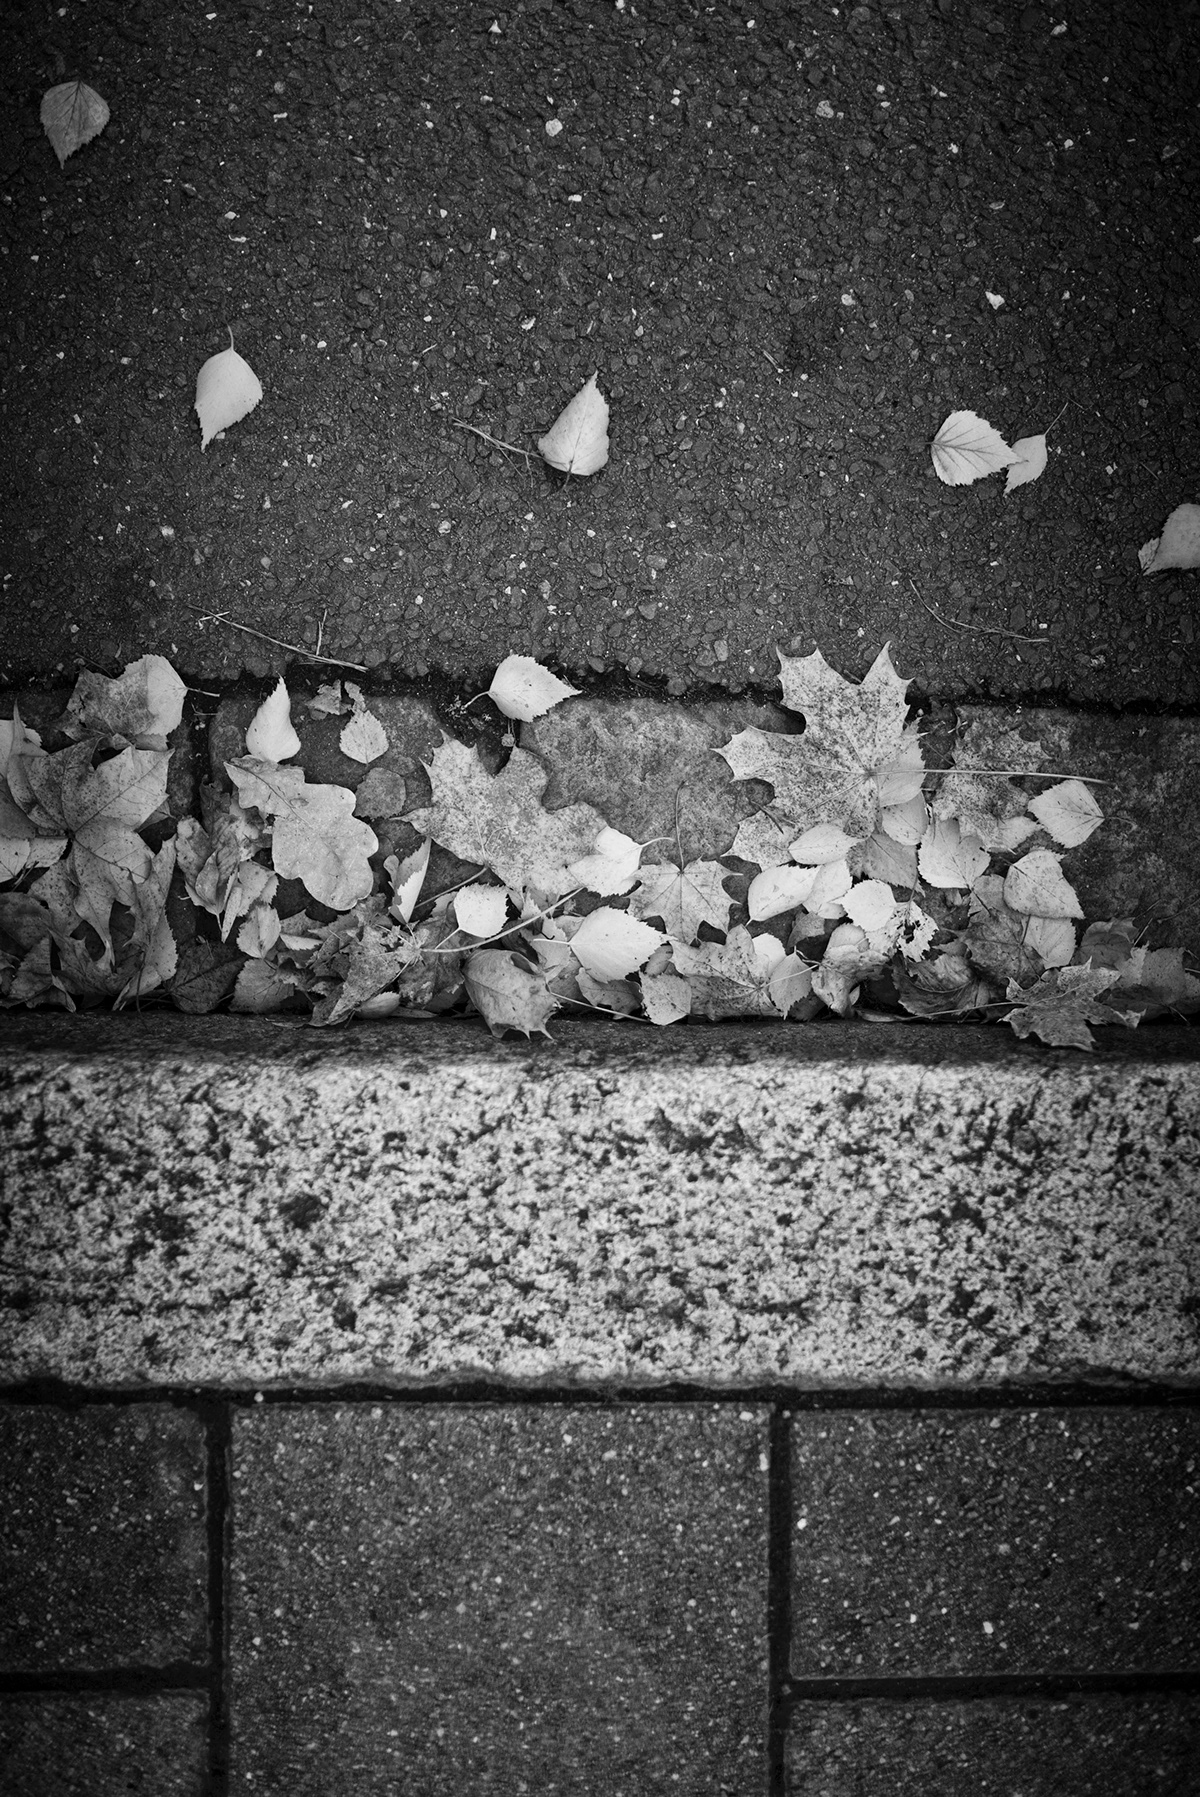 autumn black White sad melachonlic November blues erlangen germany city town streets empty